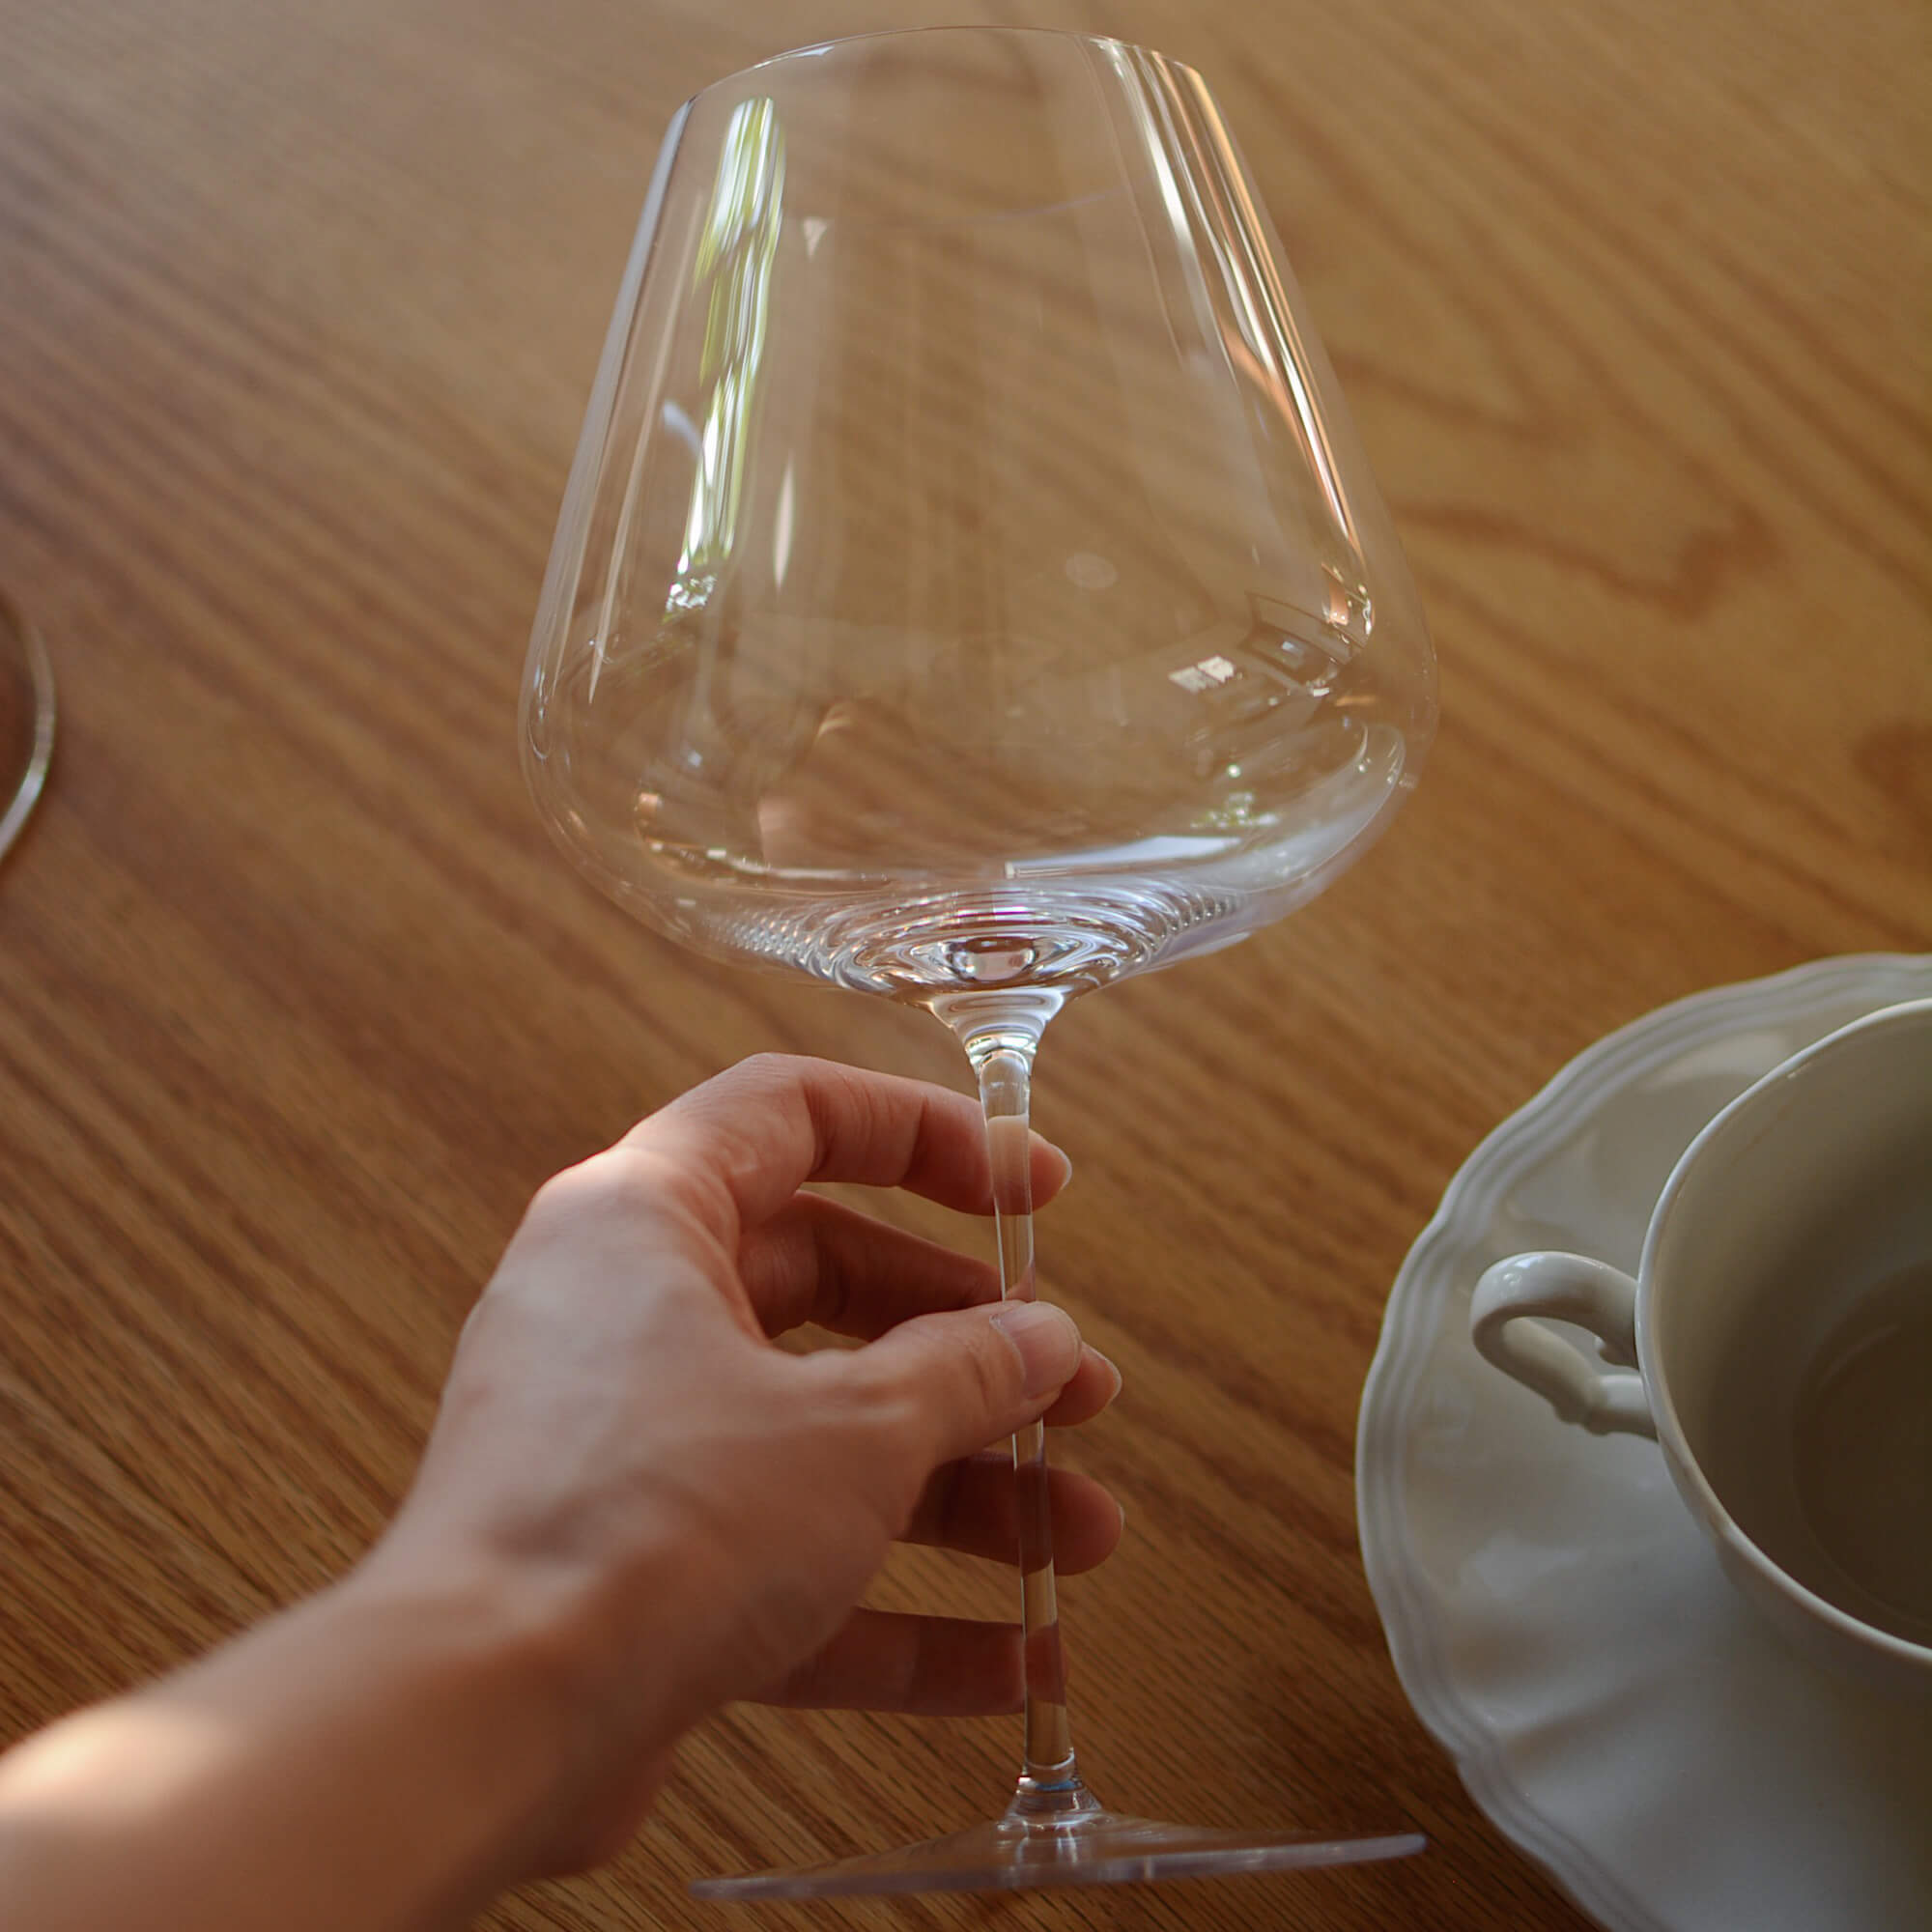 Rosé Wine Glass Patterned Koozie — Rosé All Day by Rosé Season